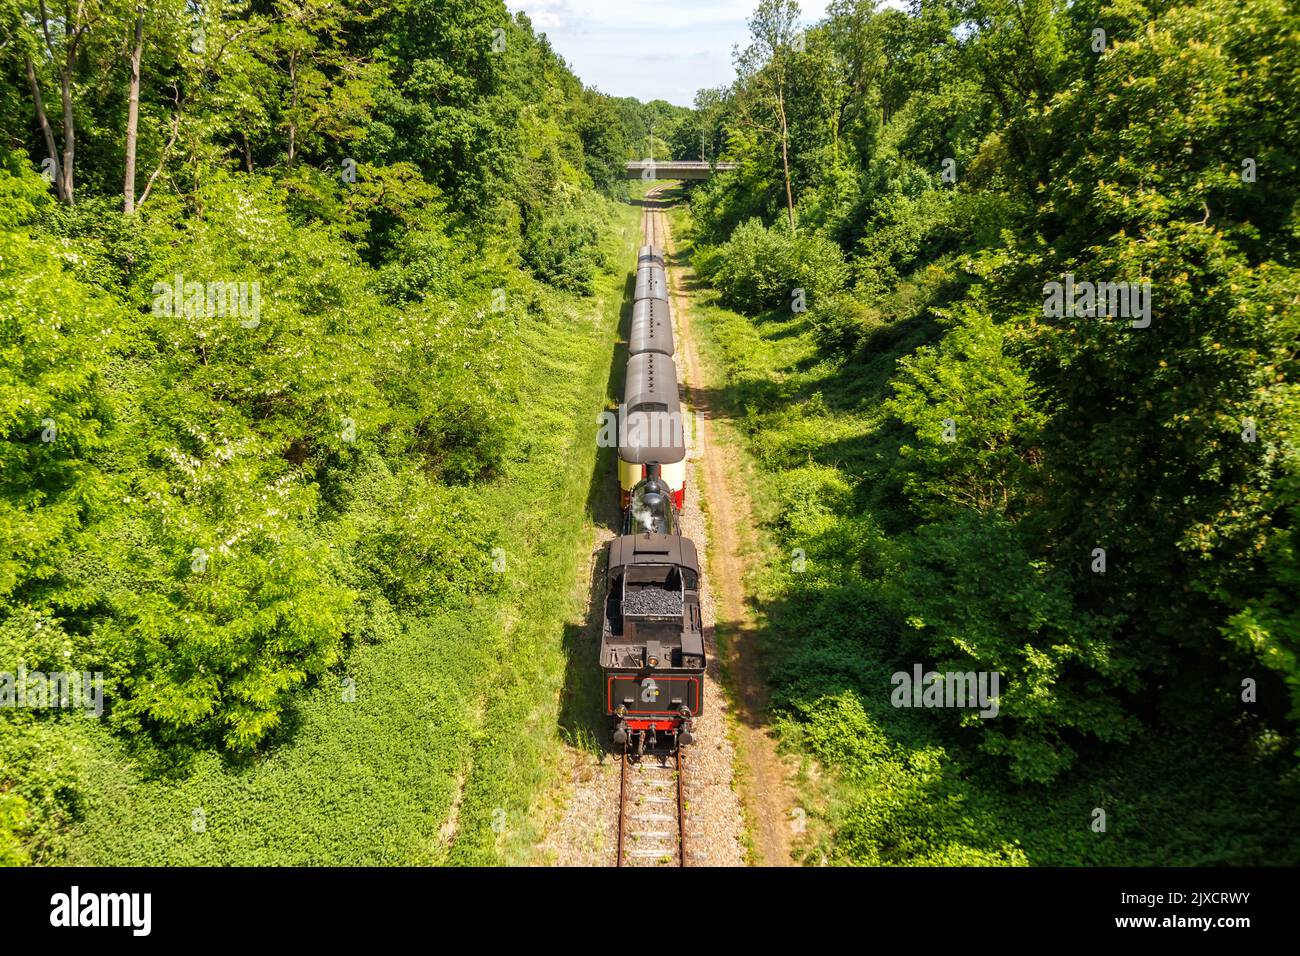 Miljoenenlijn steam train locomotive museum railway rail near Kerkrade in the Netherlands Stock Photo